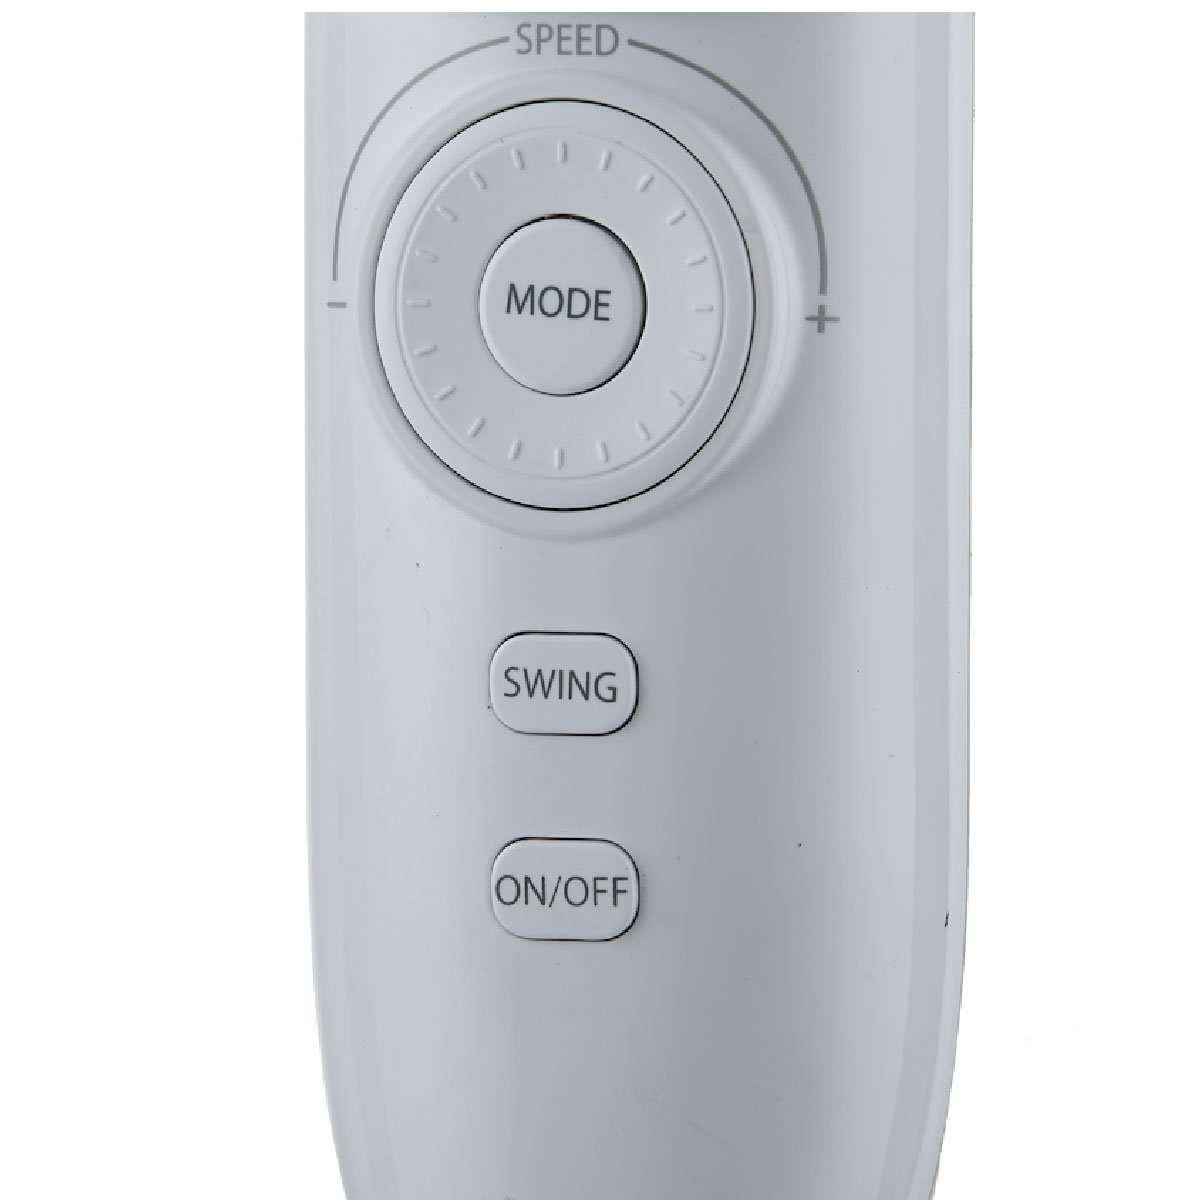 Toshiba Remote Control 16 Inches Digital DC Stand fan